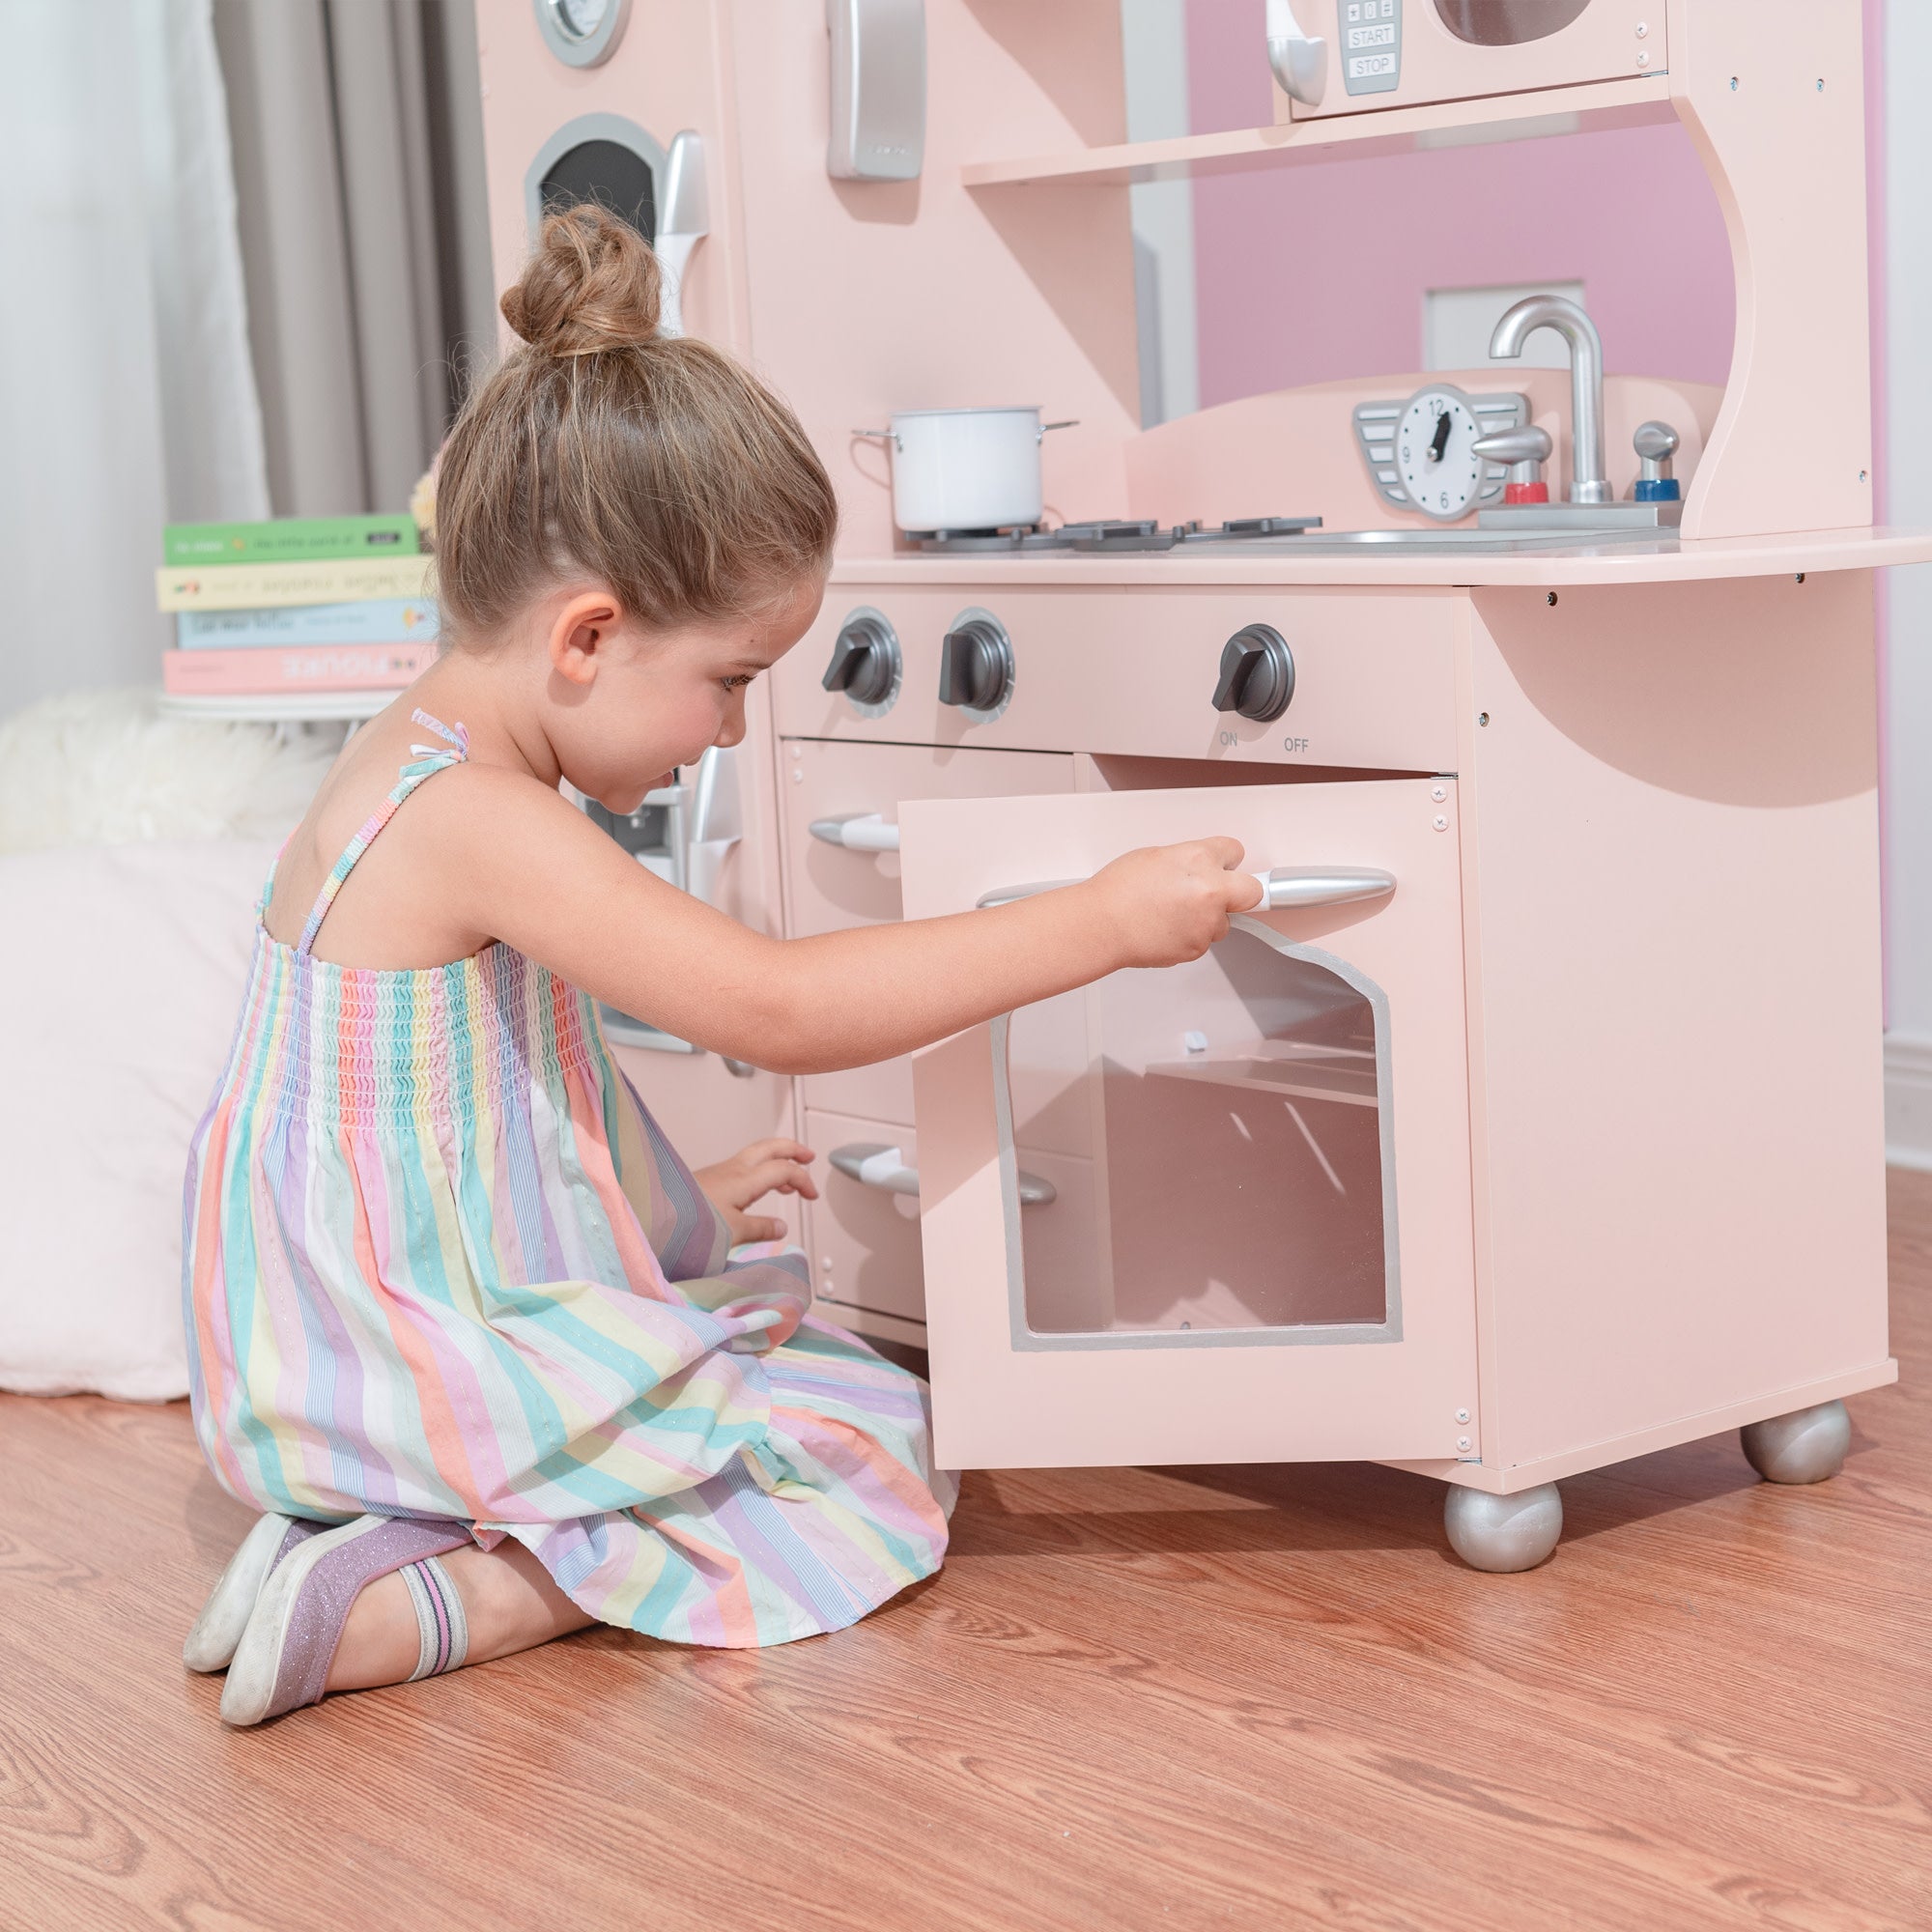 Childrens Furniture: Kids Bedroom & Play Room Toys - Teamson